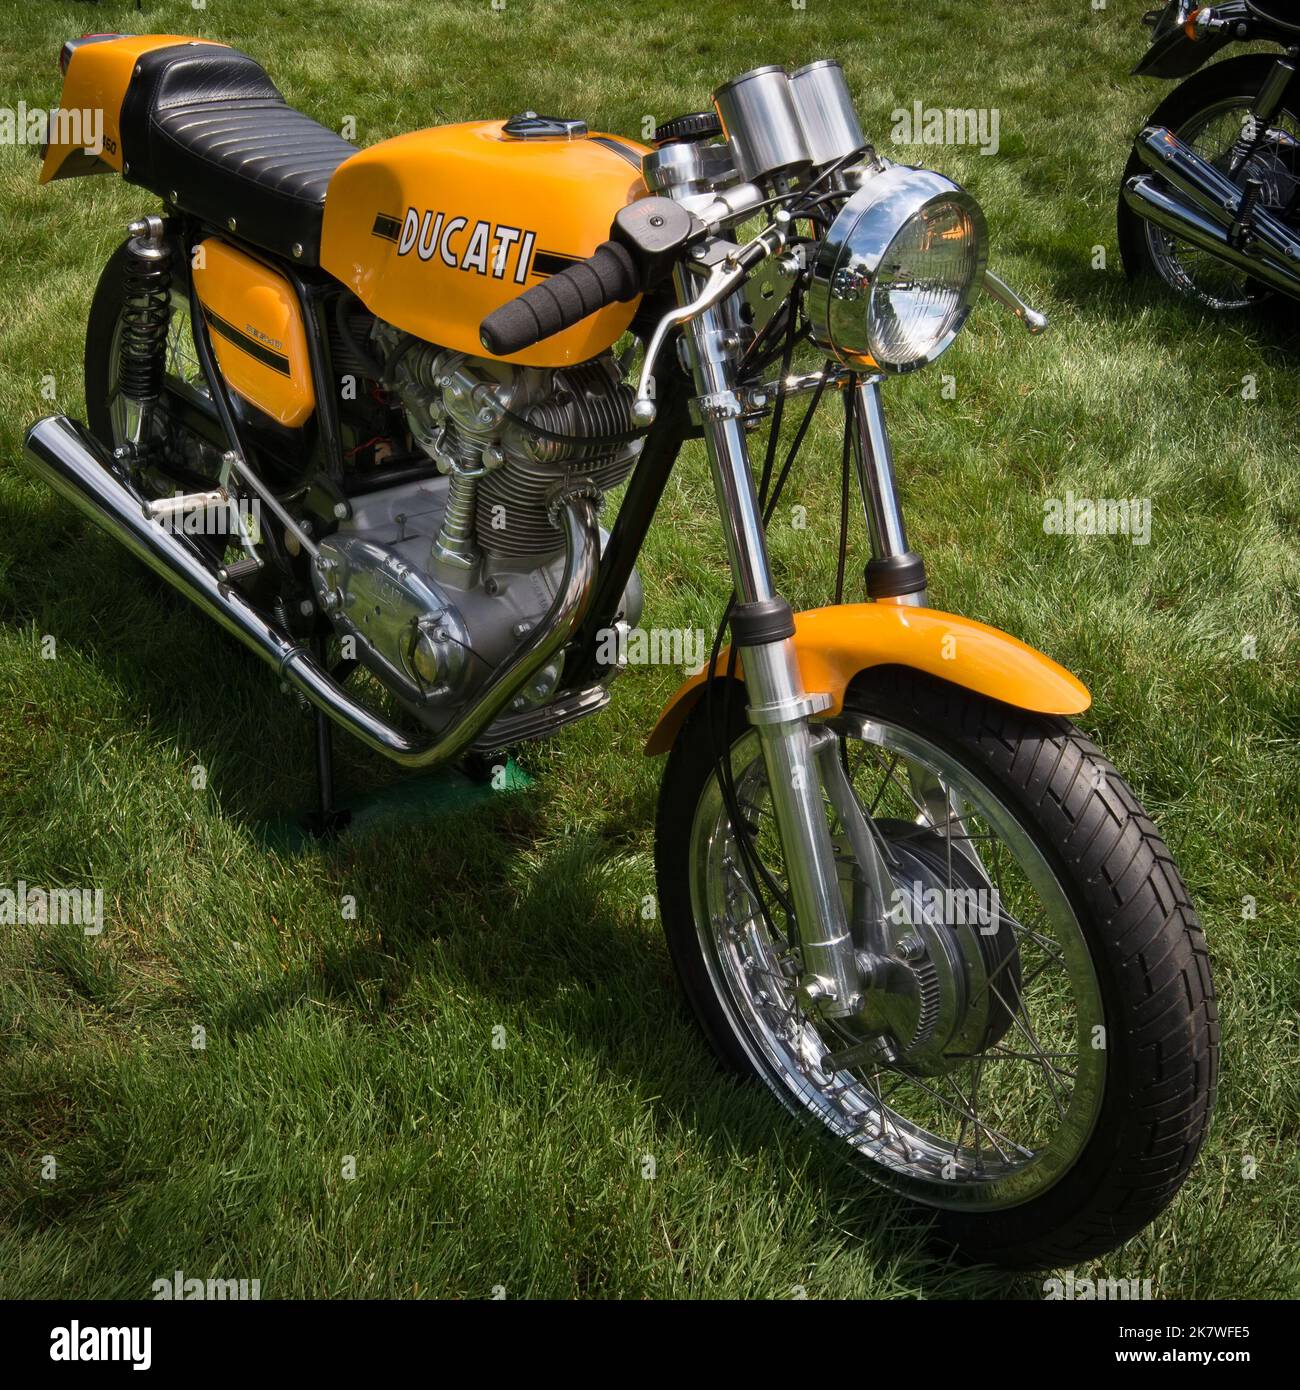 GROSSE POINTE SHORES, MI/USA - JUNE 16: A 1969 Ducati 450 cc Desmo motorcycle, EyesOn Design car show, Edsel & Eleanor Ford House, near Detroit. Stock Photo